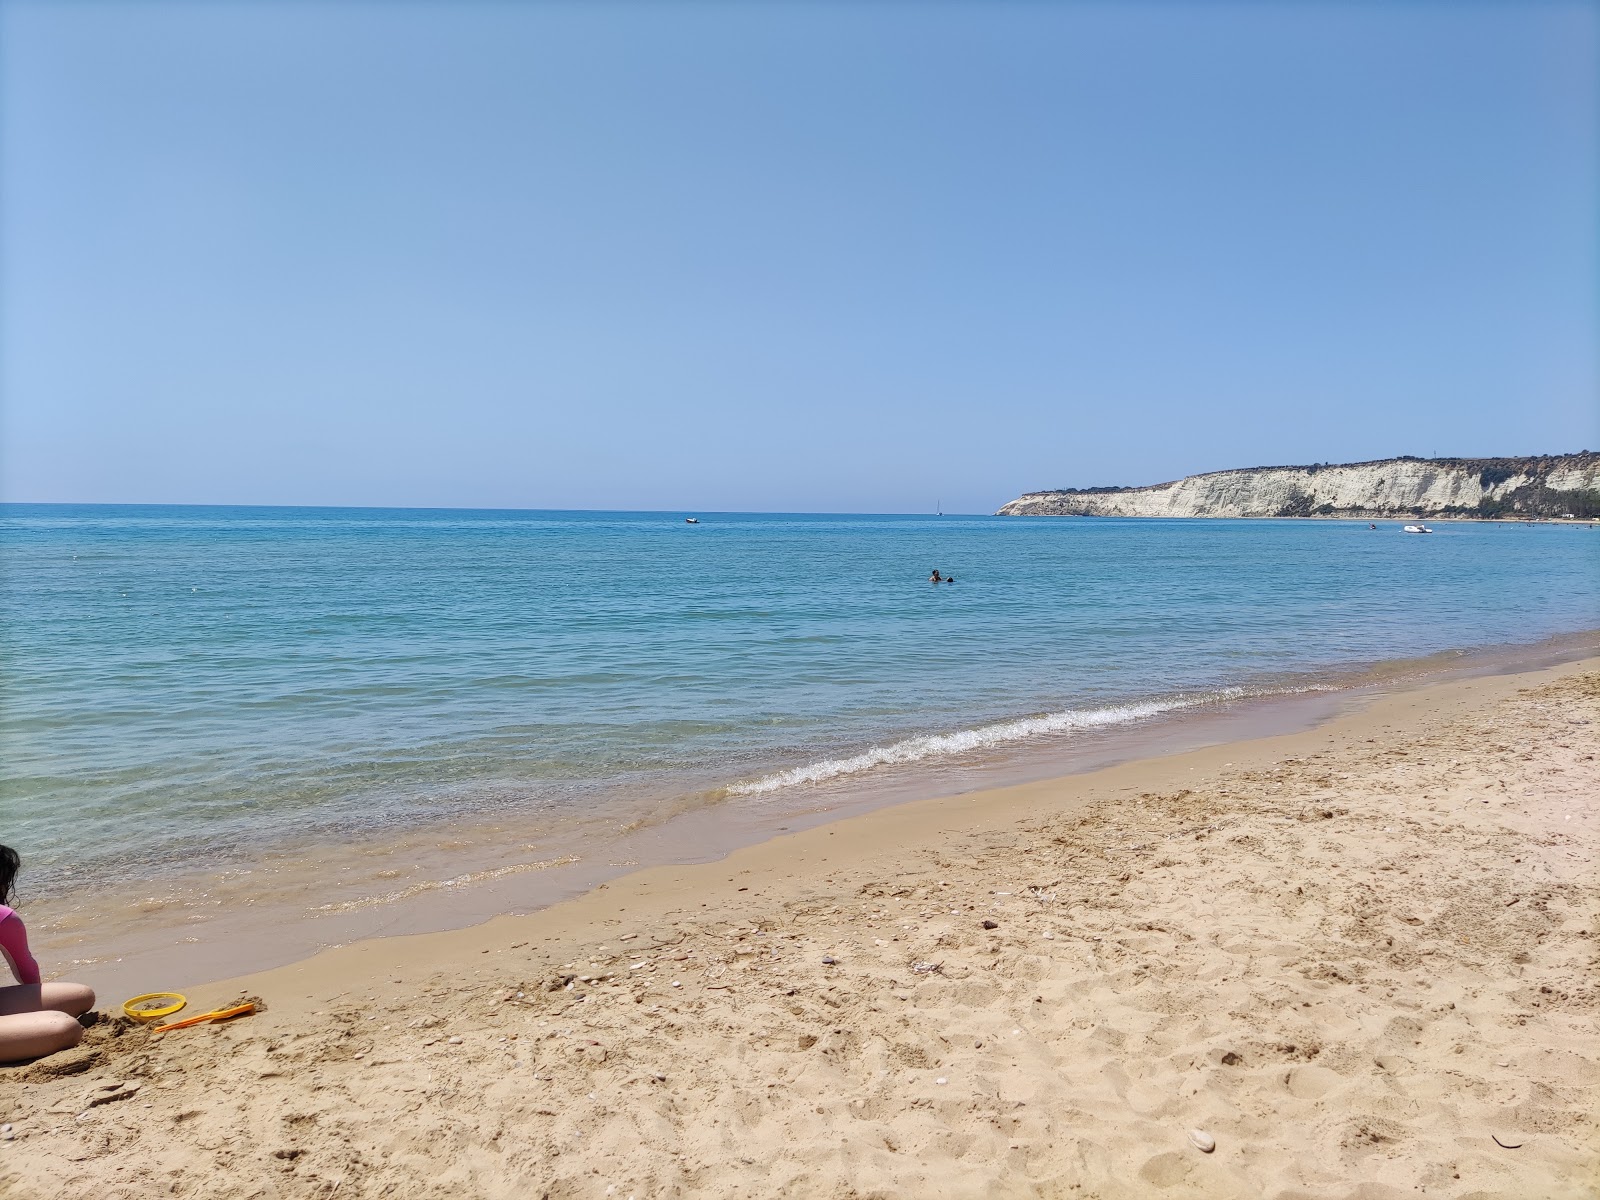 Fotografie cu Spiaggia Di Eraclea Minoa - locul popular printre cunoscătorii de relaxare